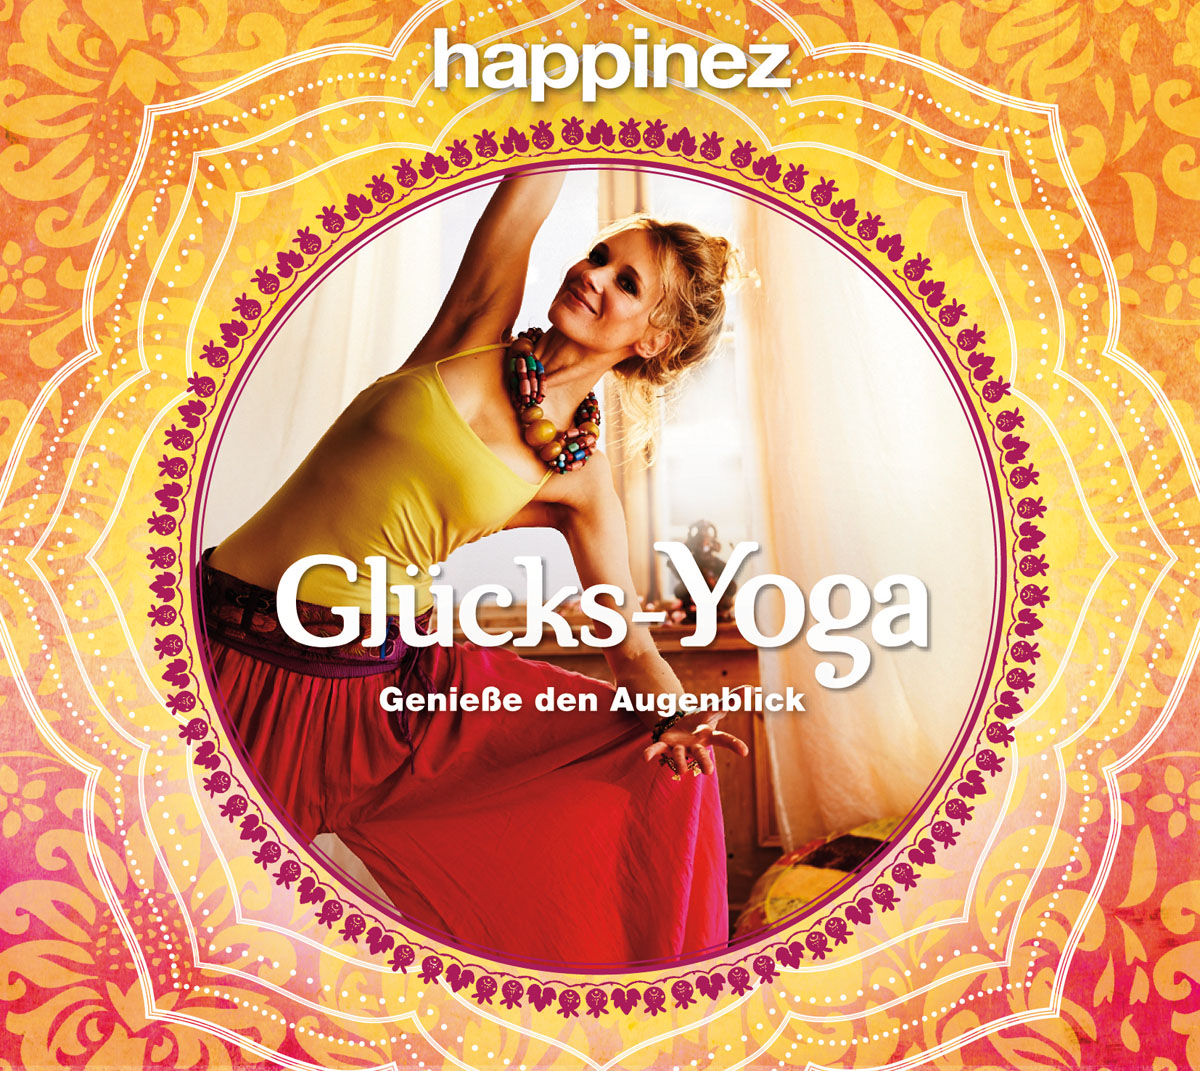 Happinez CD Glücks-Yoga